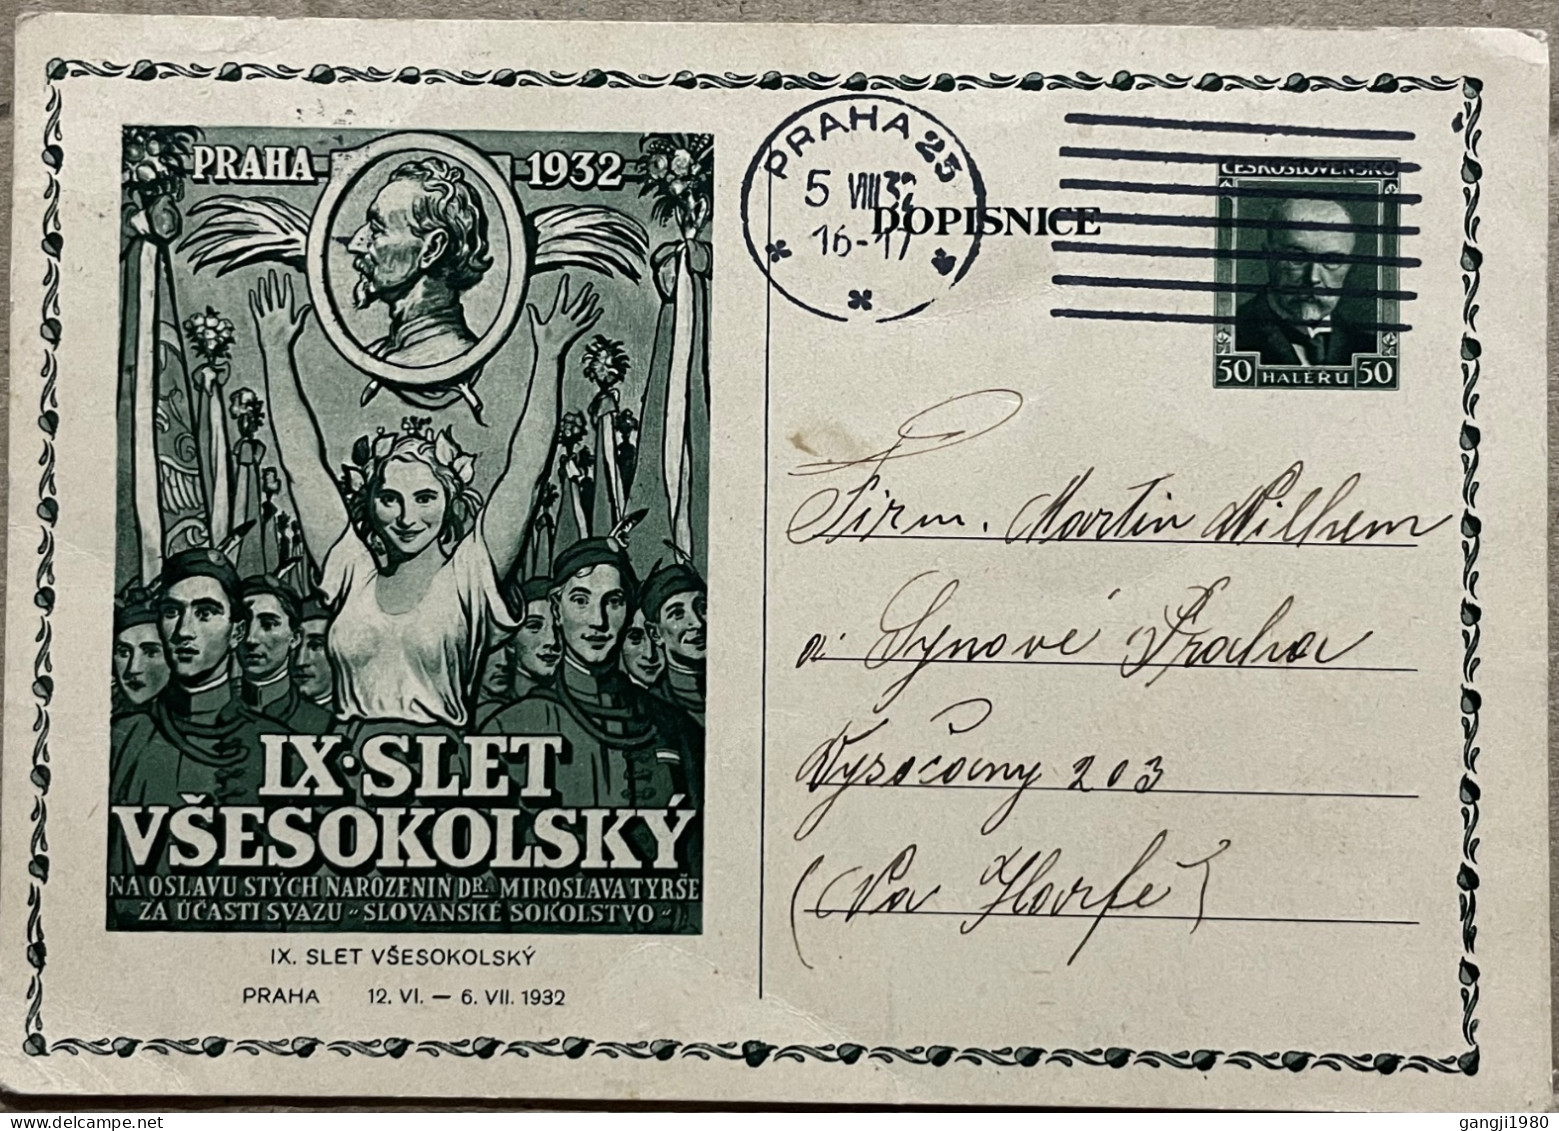 CZECHOSLOVAKIA 1932, STATIONERY CARD USED, ILLUSTRATE, WOMAN, CHARMING LADY, SLET YSESOKOLSKY, PRAHA CITY CANCEL - Cartas & Documentos